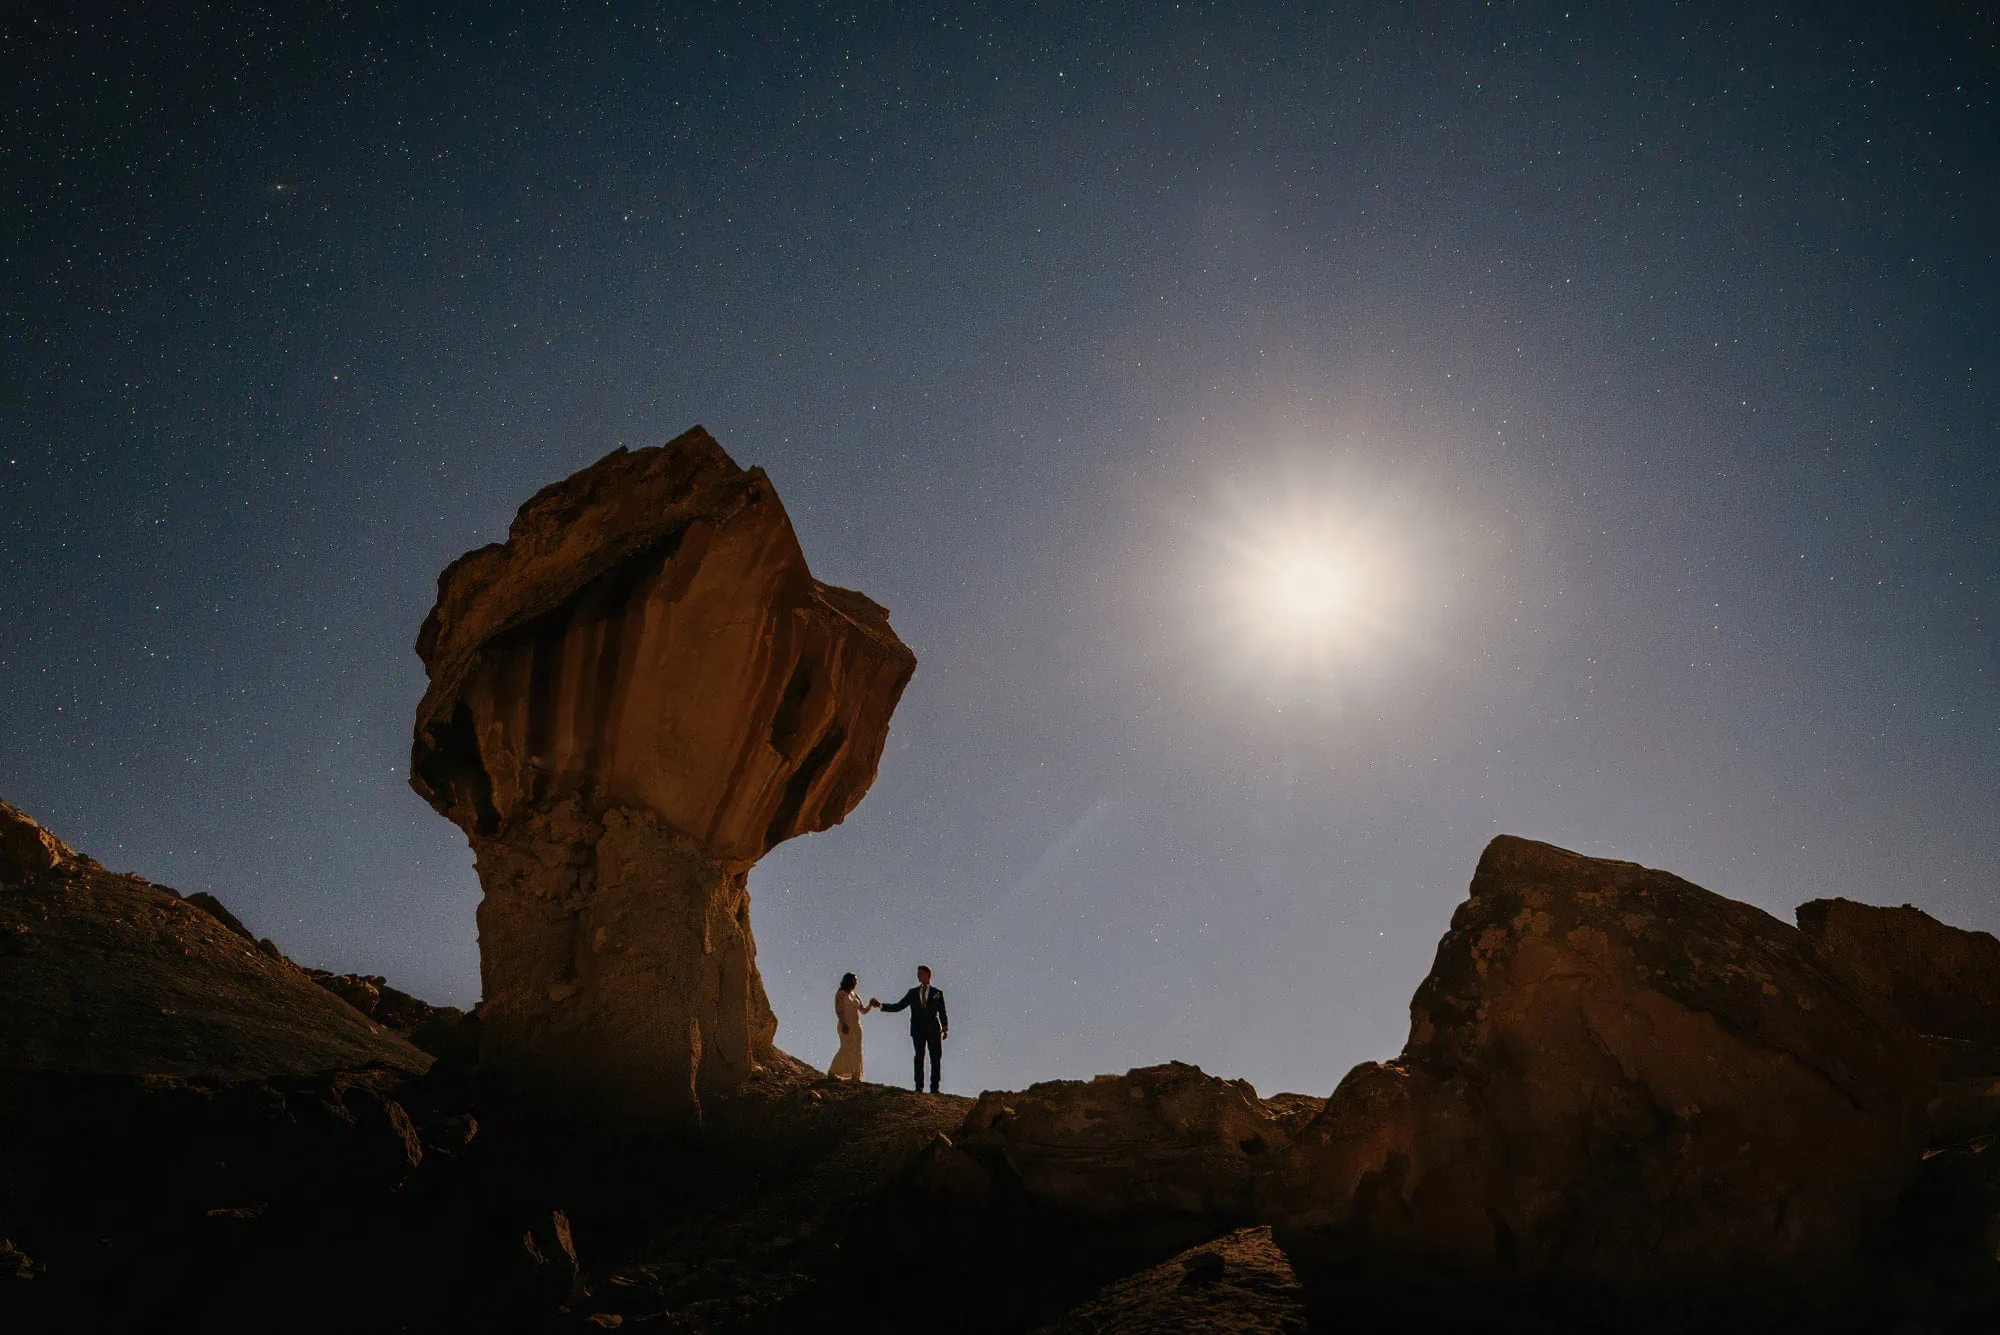 A couple walks under the moonlight.